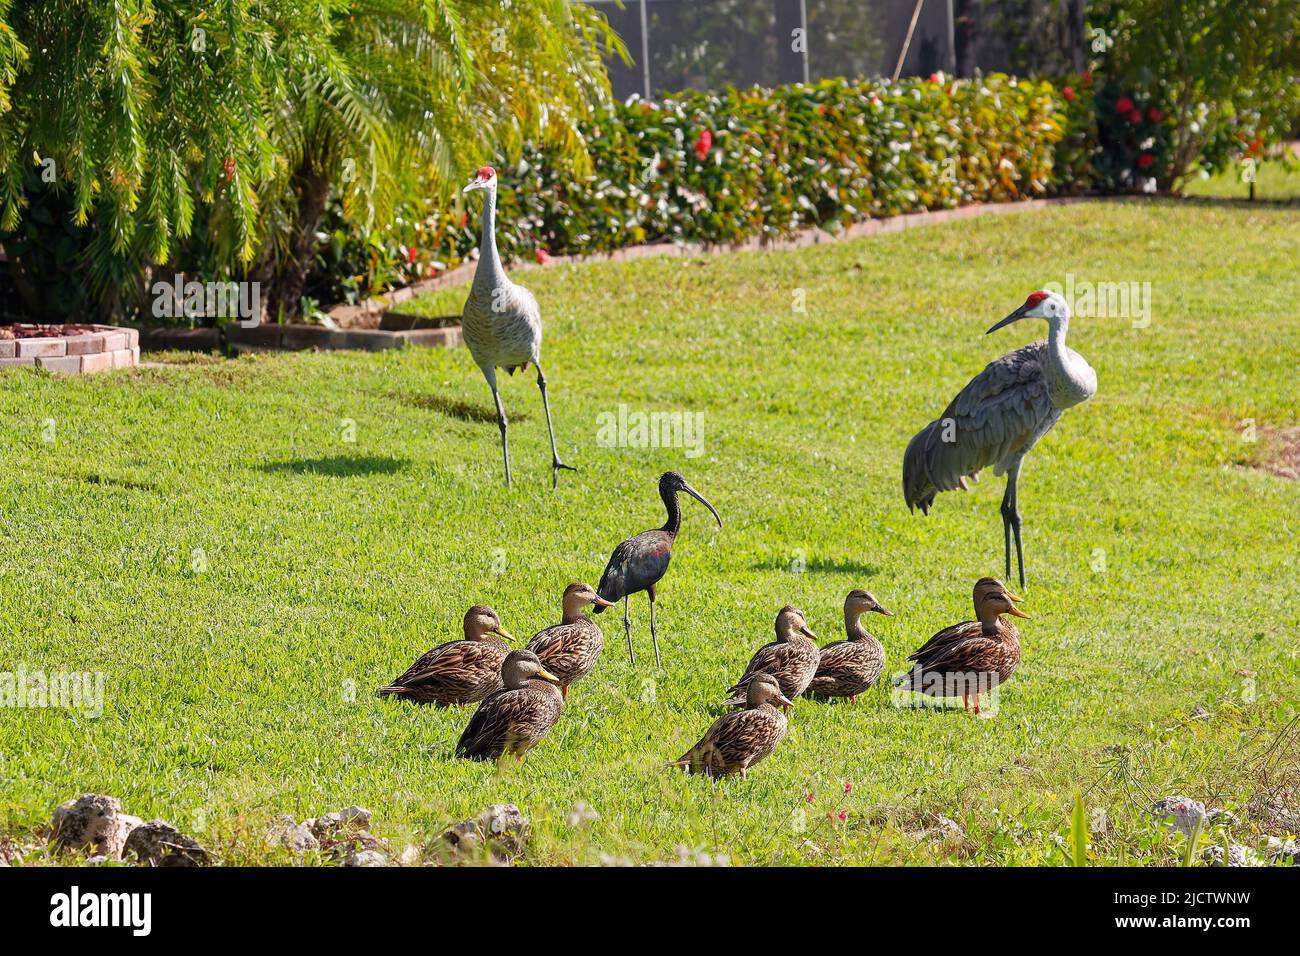 backyard birds; 8 Mottled Ducks, Glossy ibis, Sandhill crane pair, green grass, shrubs, palms, wildlife, animals, Florida; Venice; FL Stock Photo